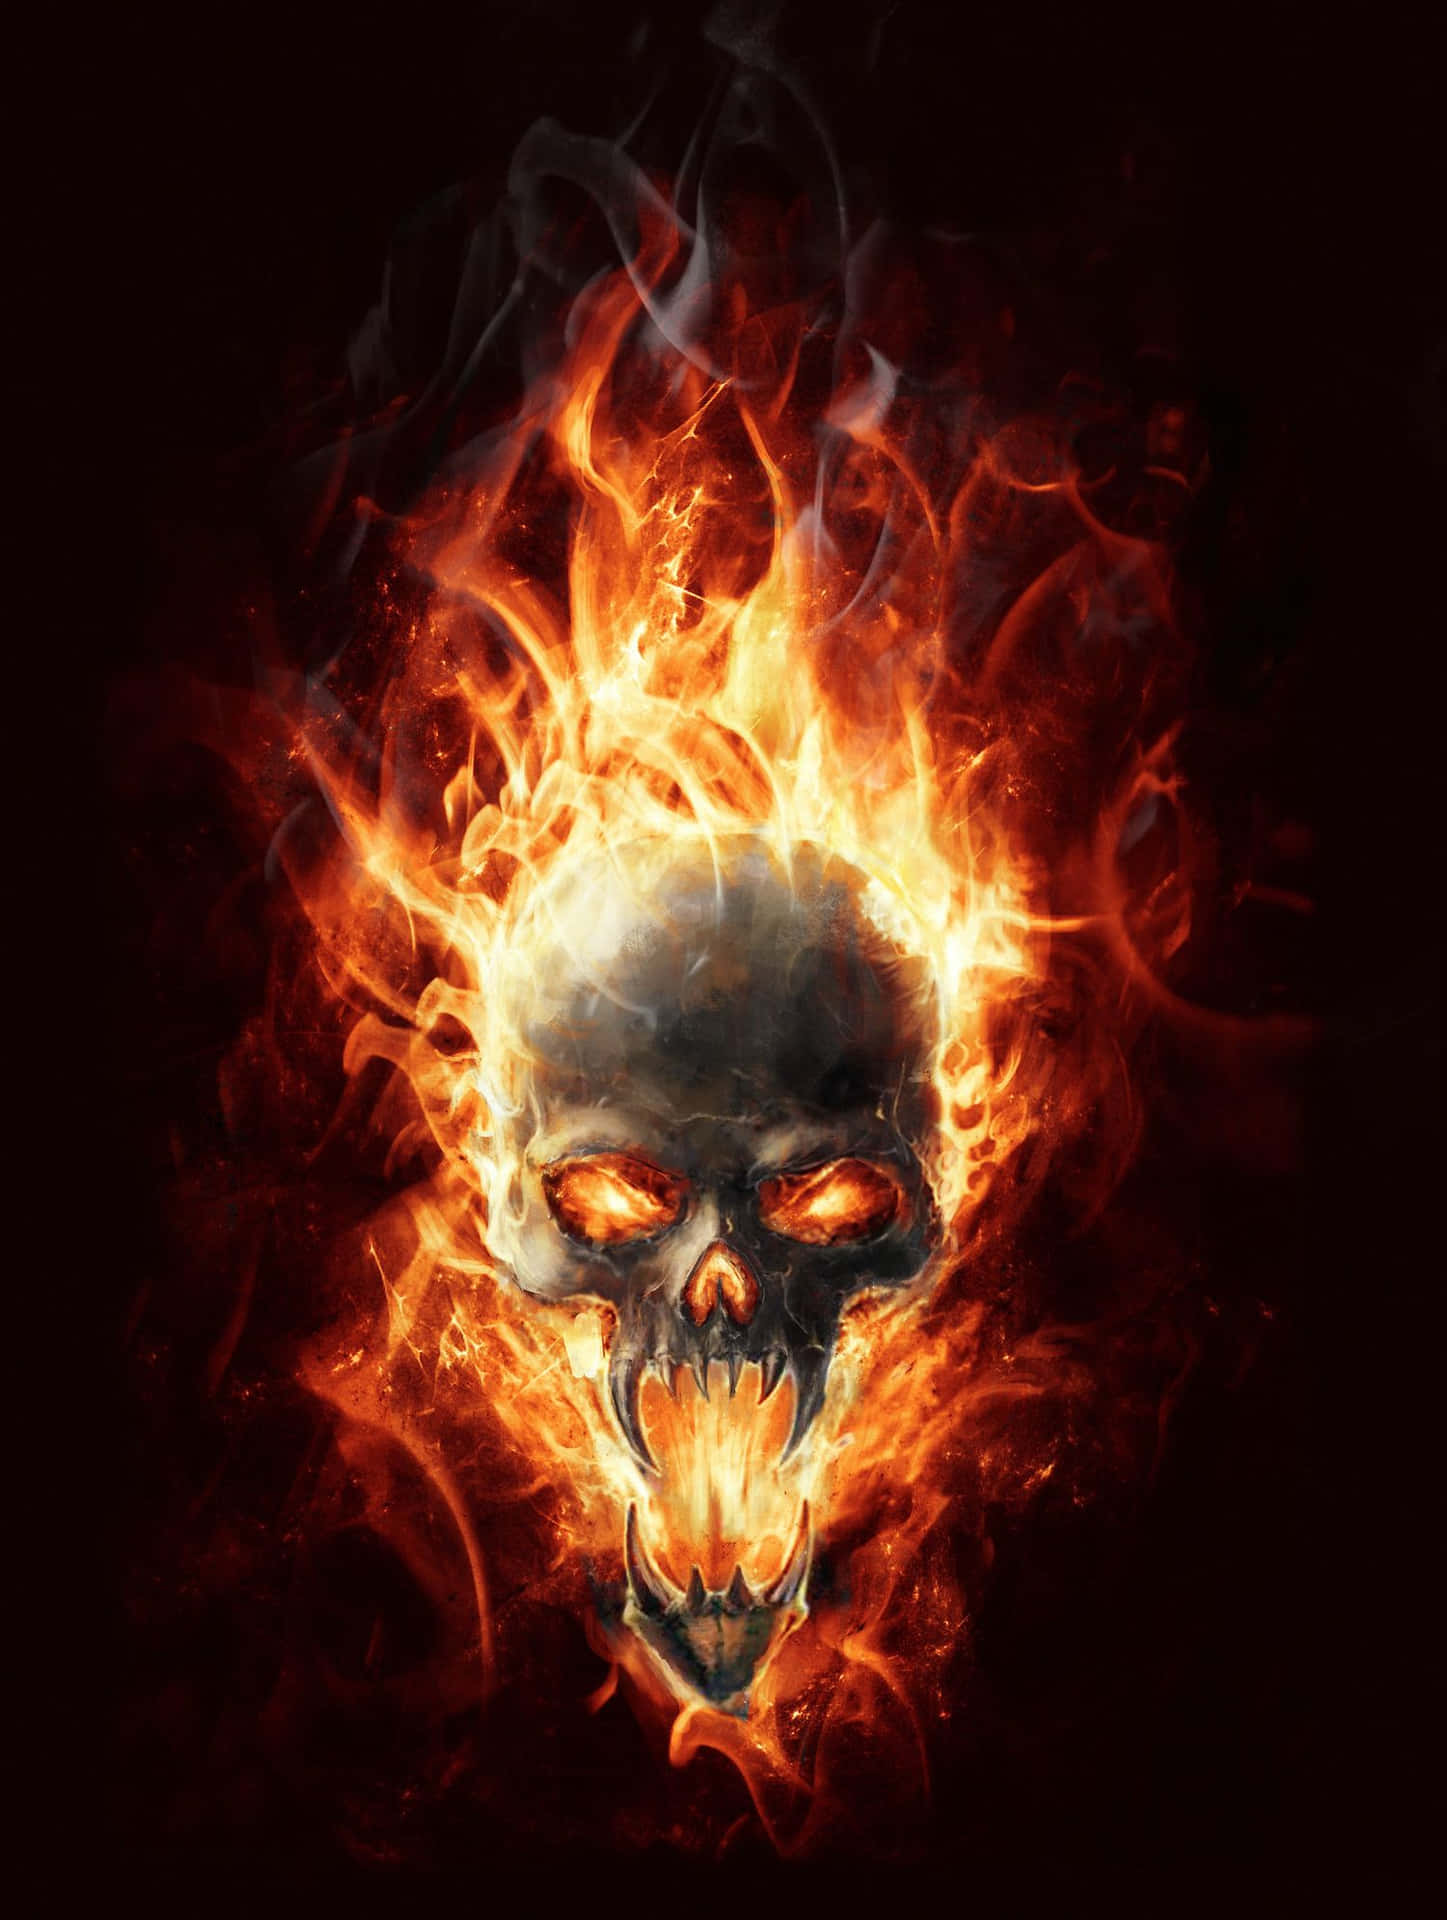 "Let your fiery spirit burn strong" Wallpaper